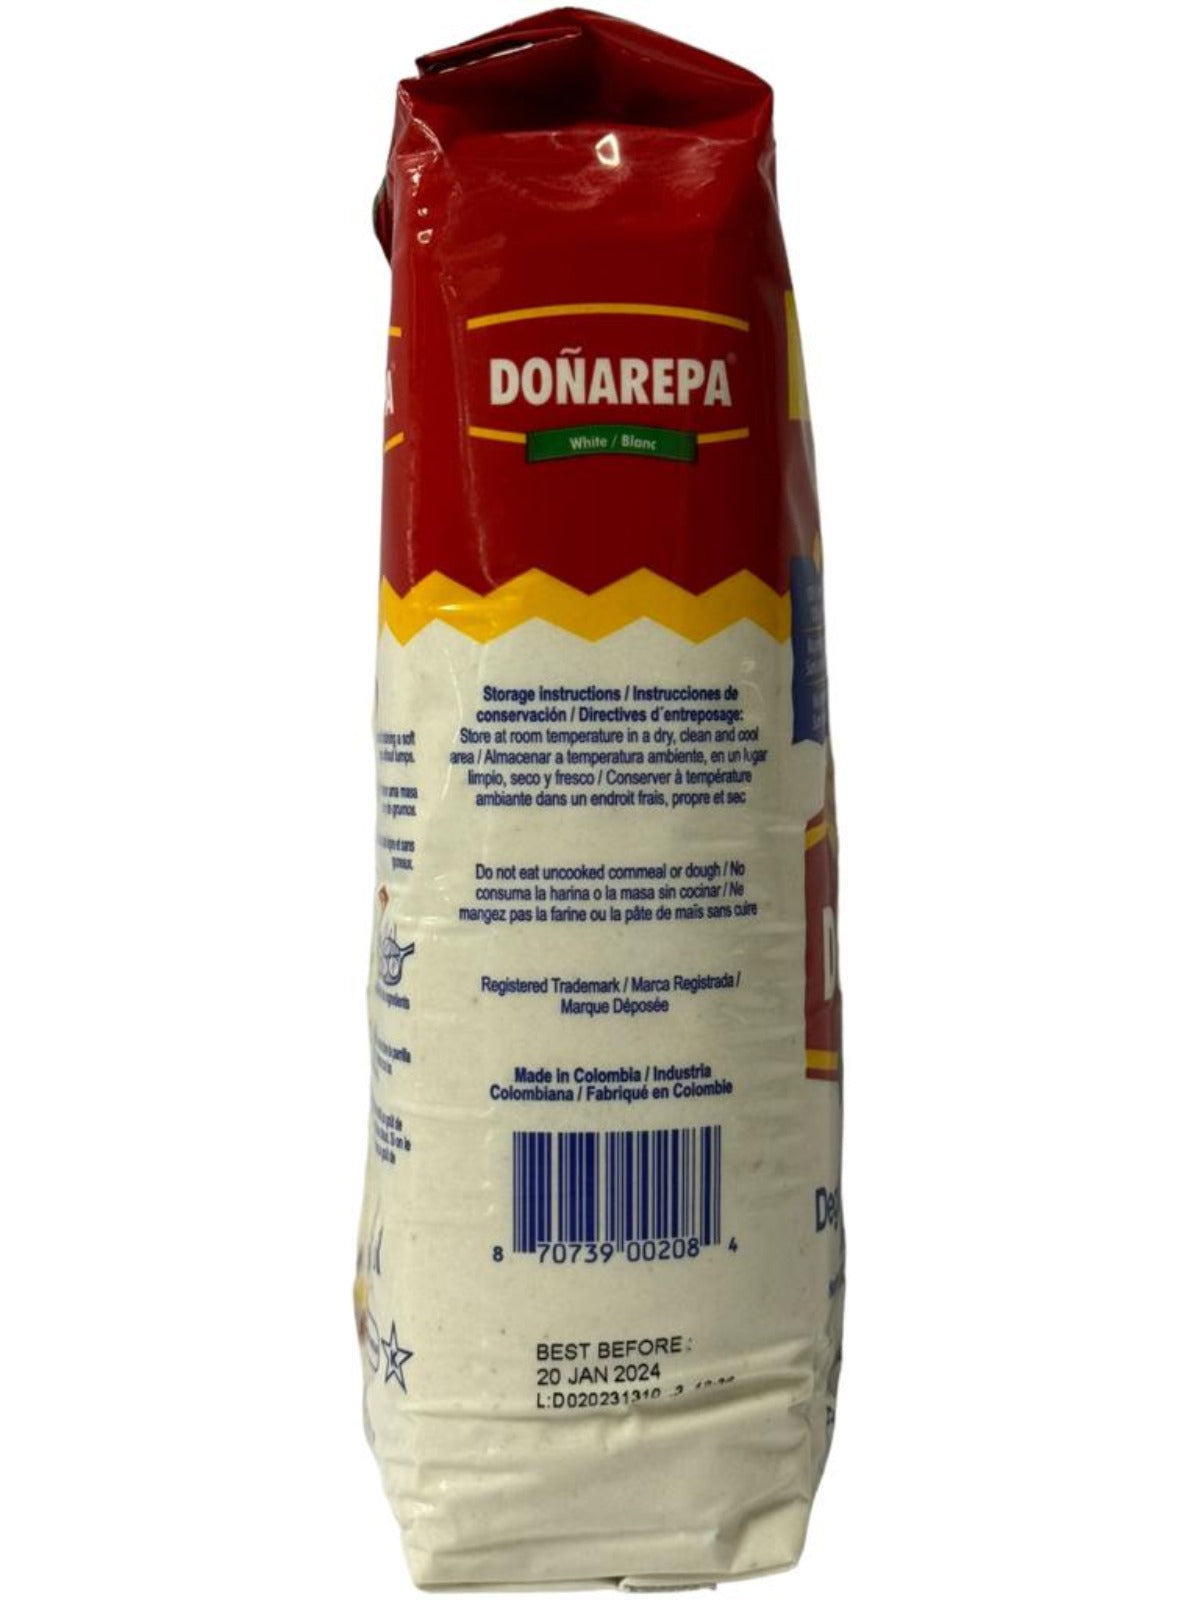 Donarepa Colombian White Corn flour 1kg- 4pack 4kg total